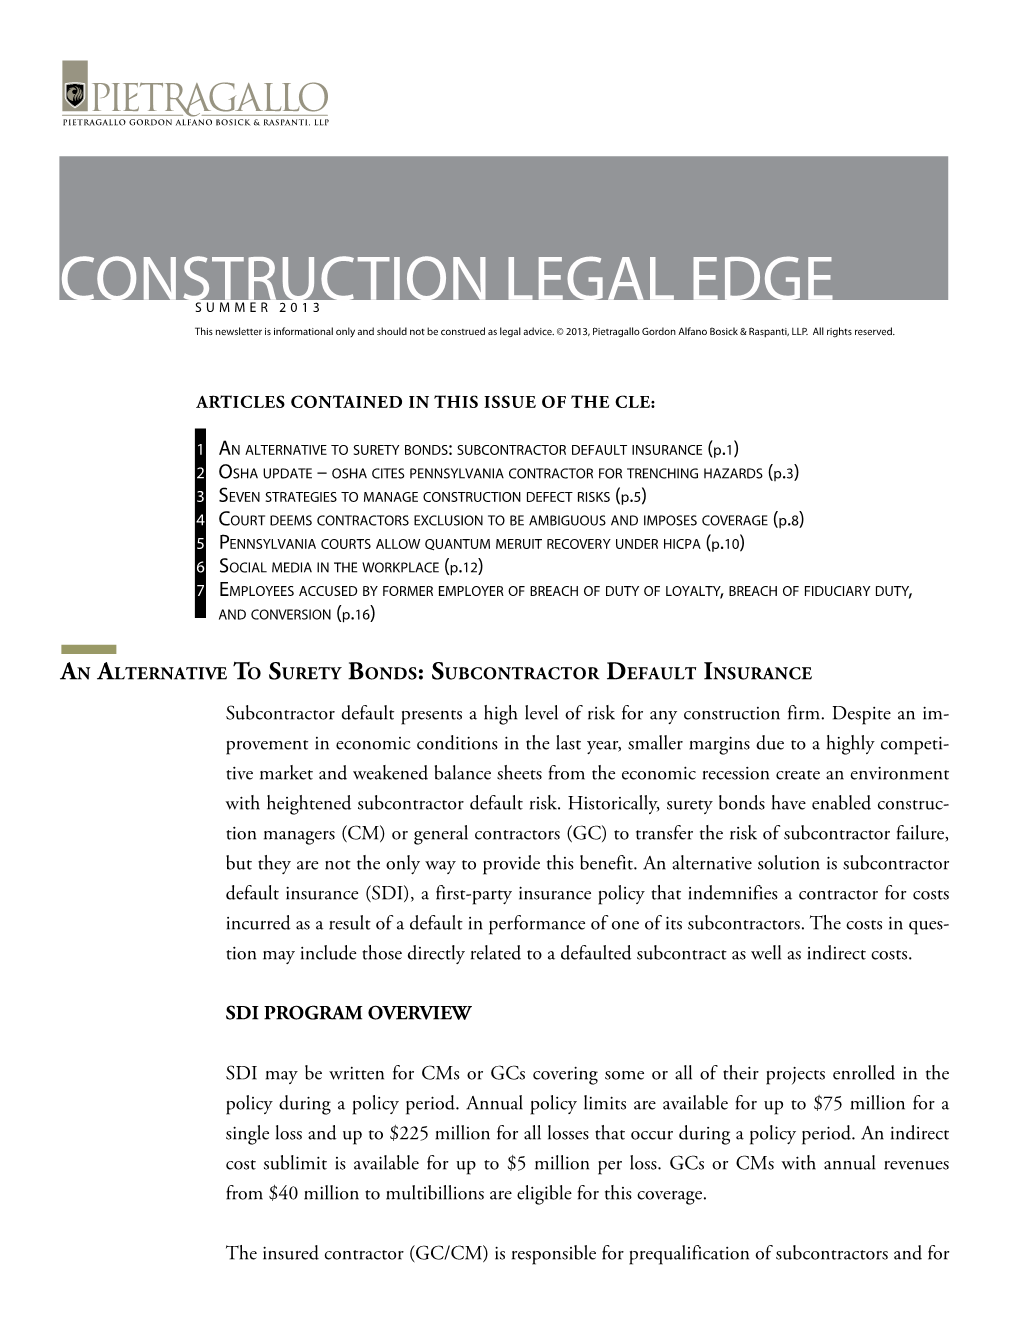 Construction Legal Edge Summer Newsletter 2013